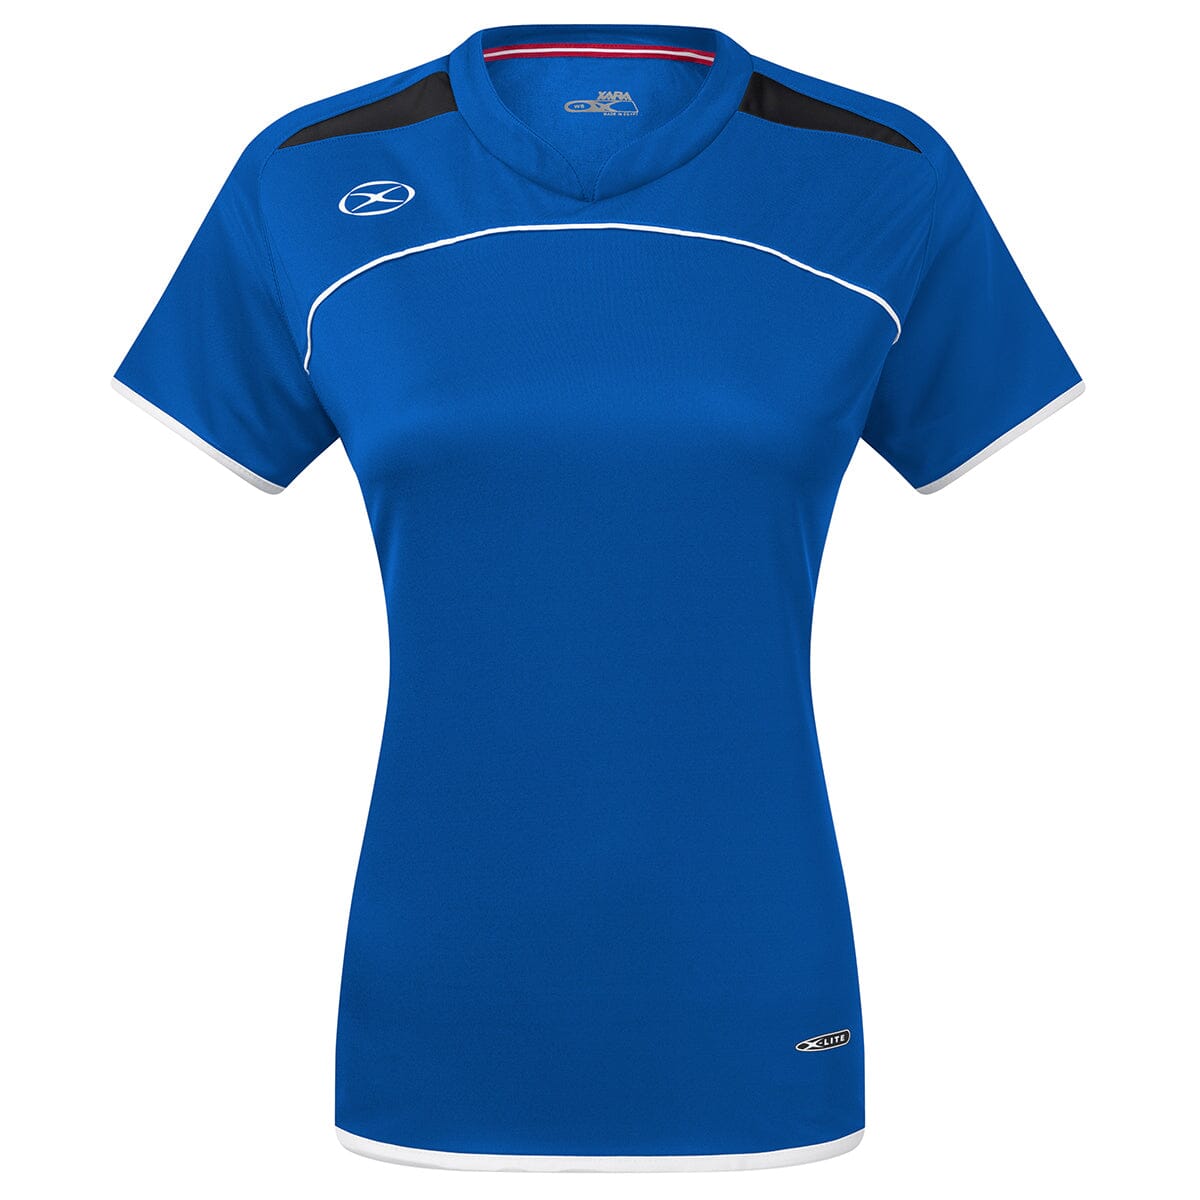 Cardiff Jersey - Female Shirt Xara Soccer Royal/Black/White Womens Youth Small 